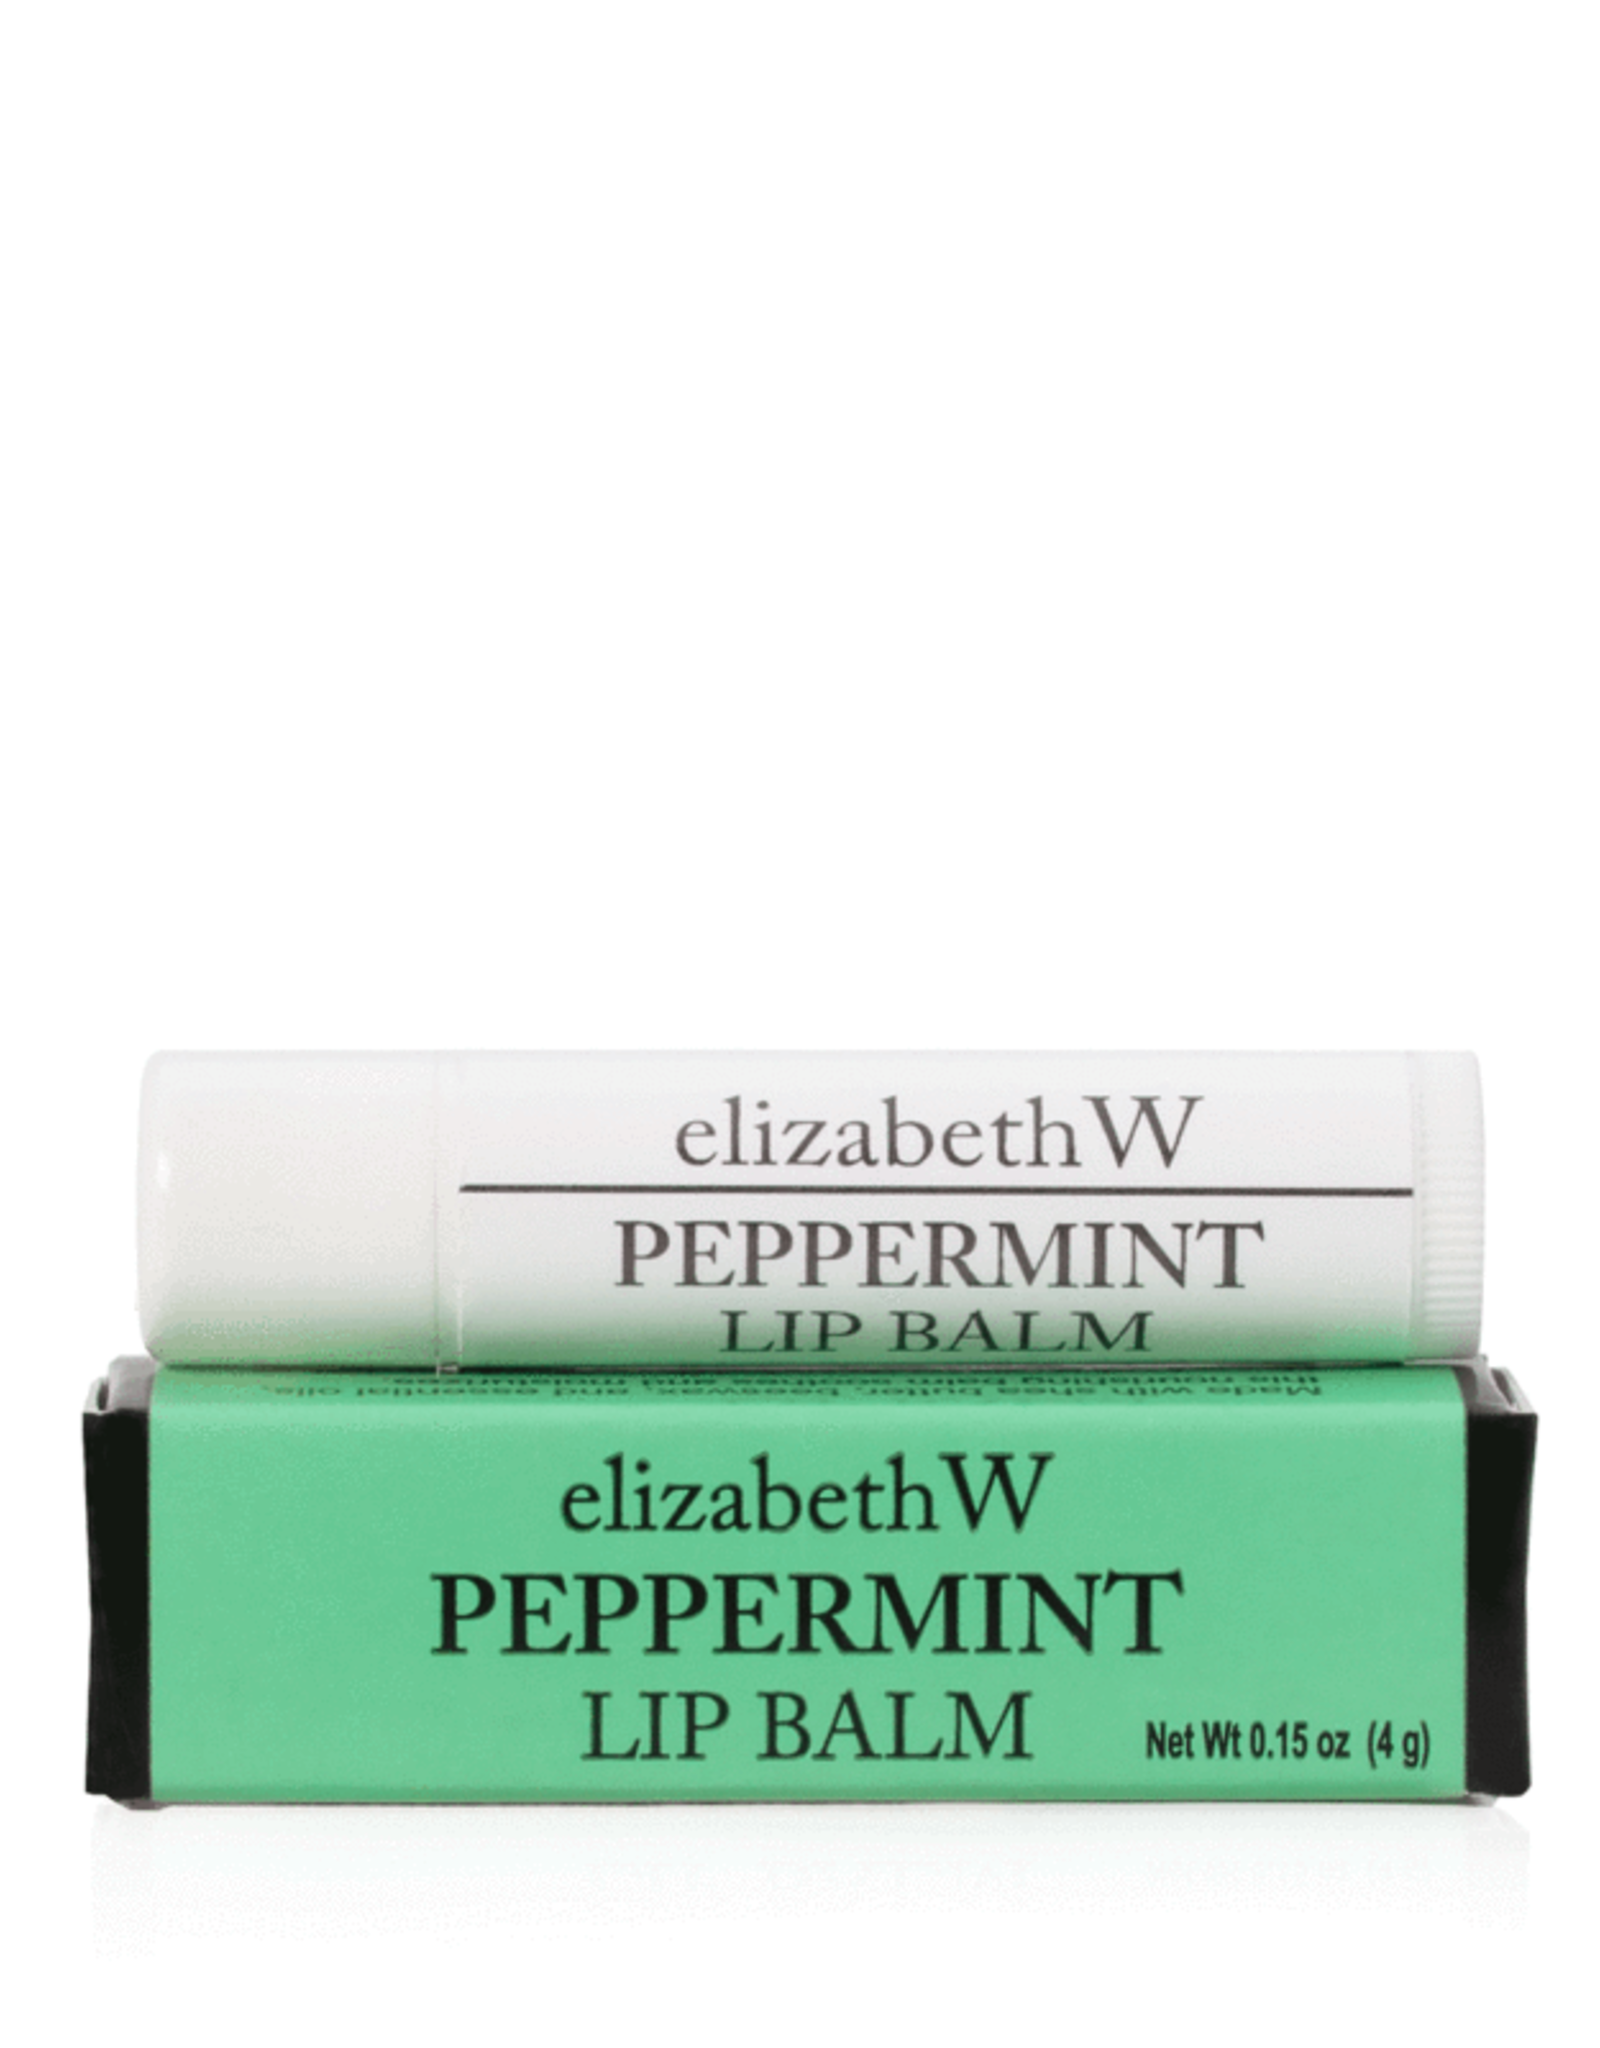 Elizabeth W Peppermint Lip Balm